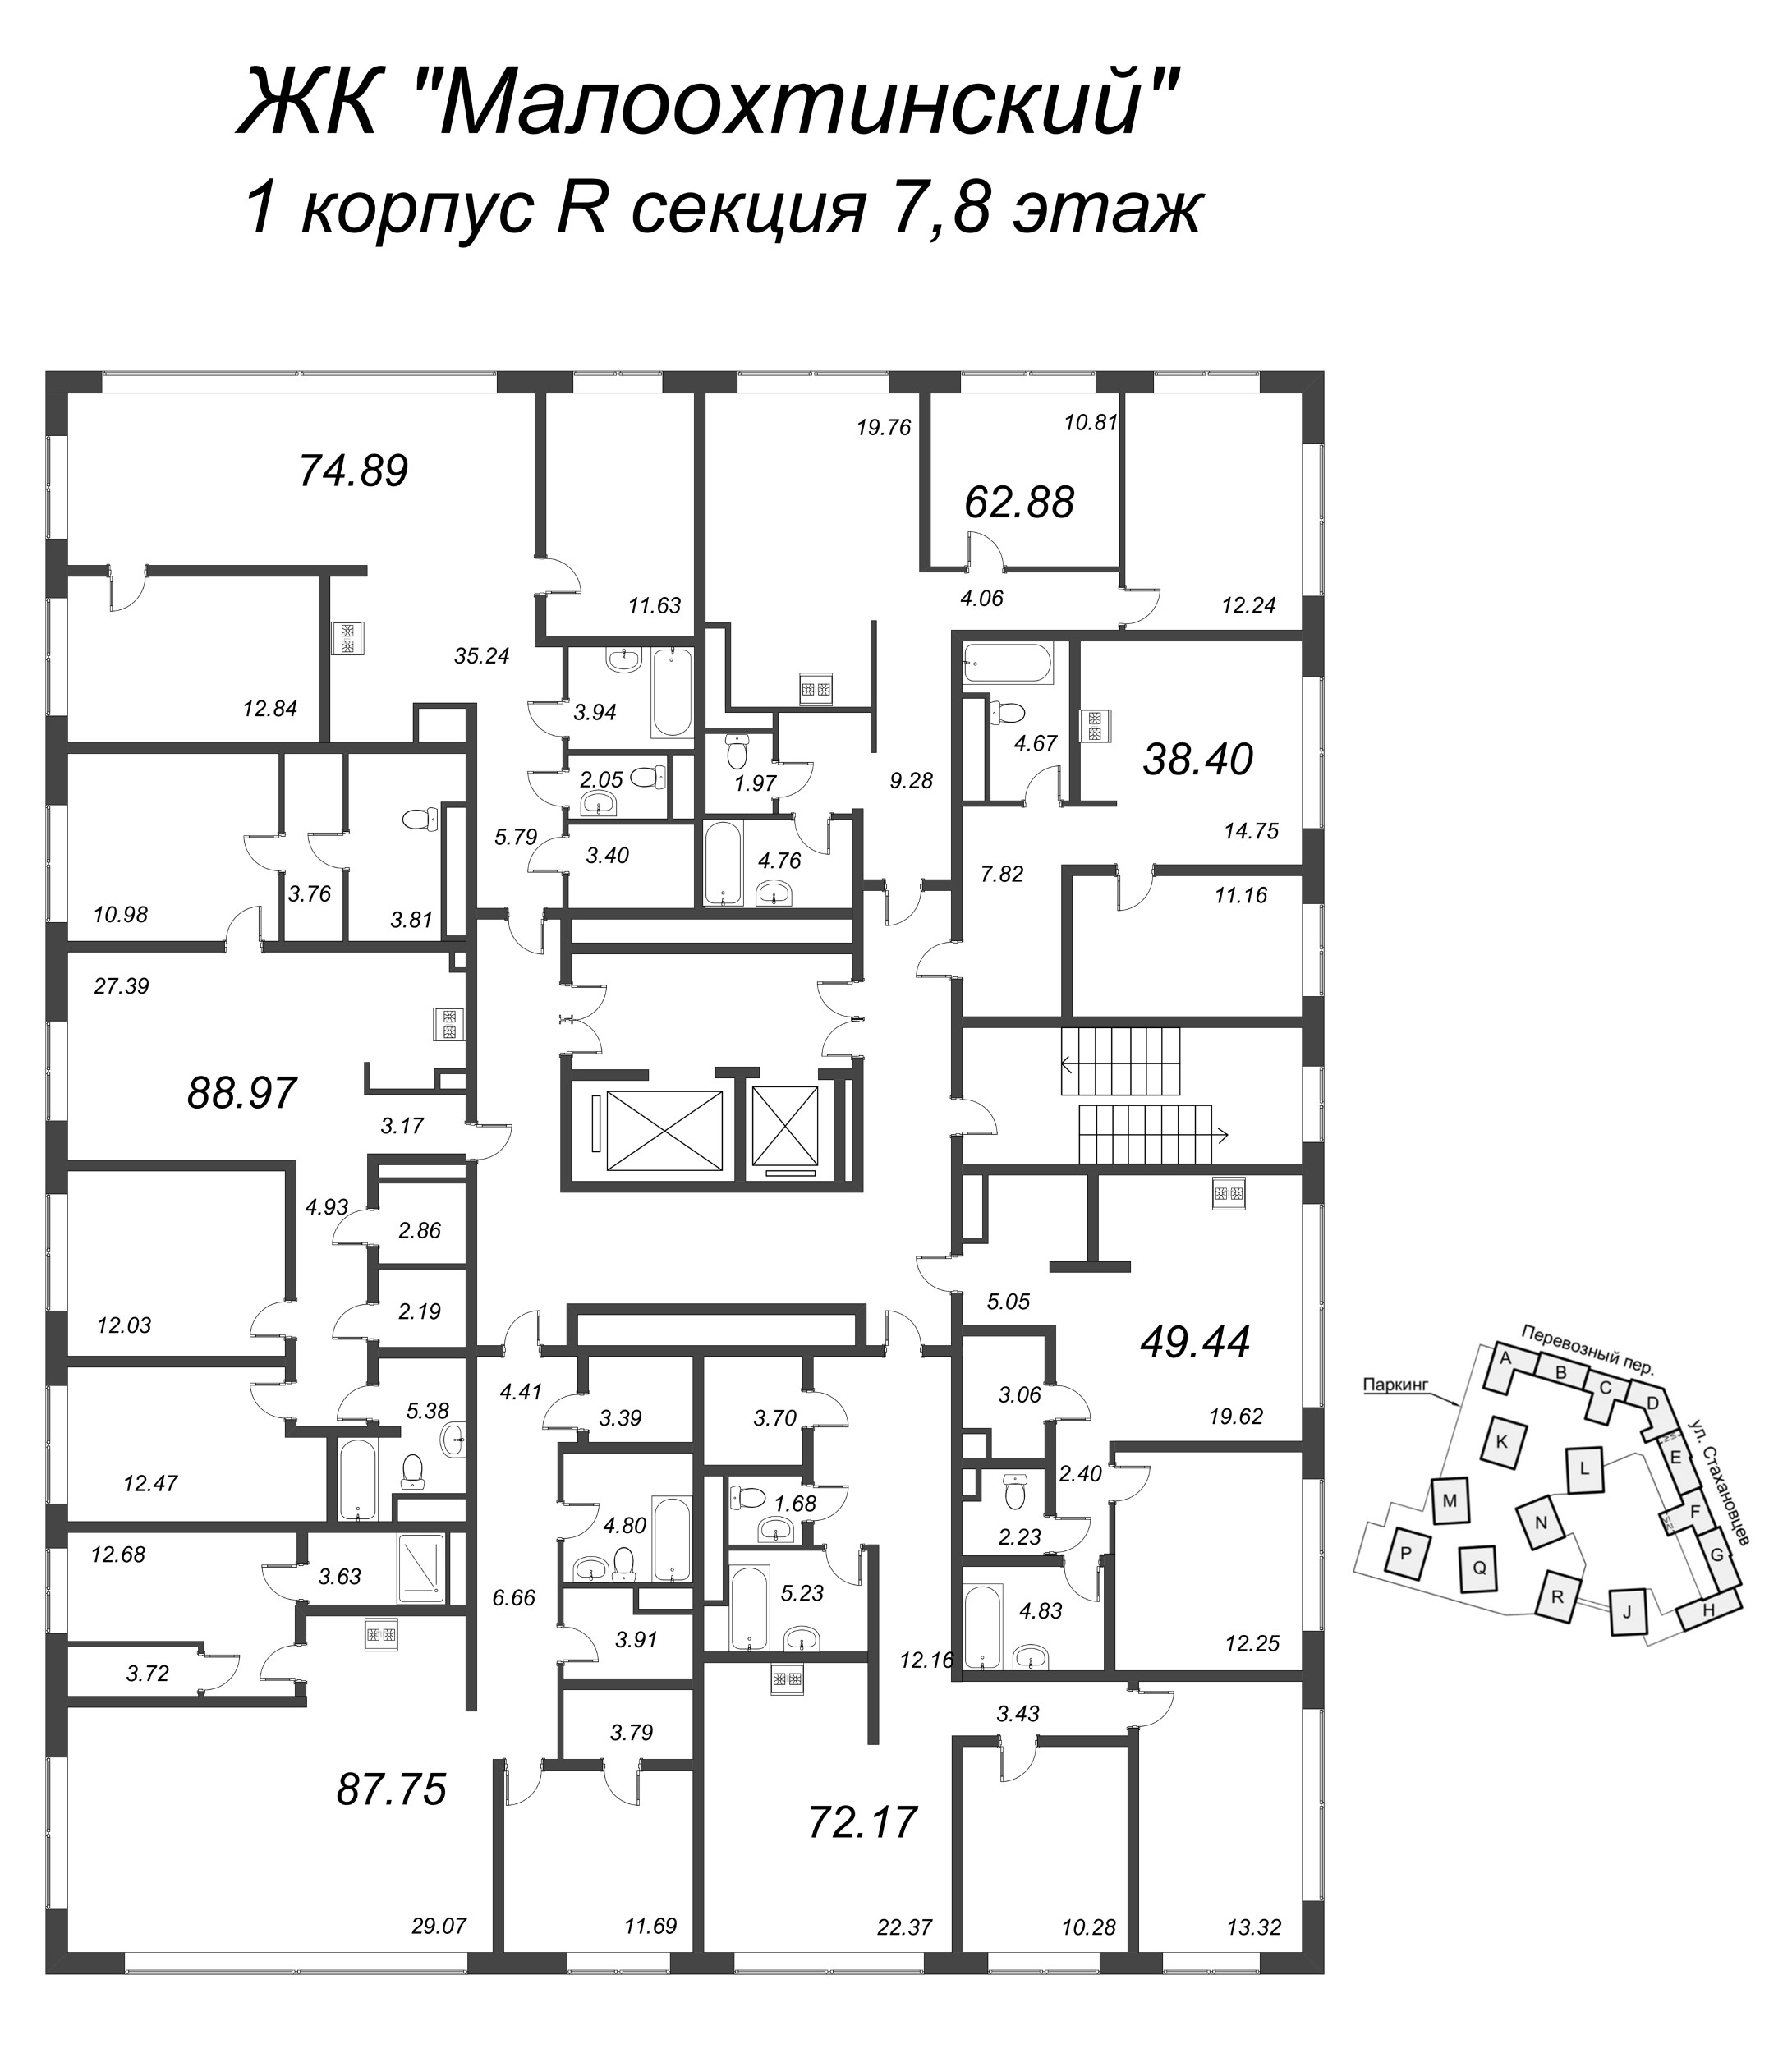 2-комнатная (Евро) квартира, 51.2 м² - планировка этажа